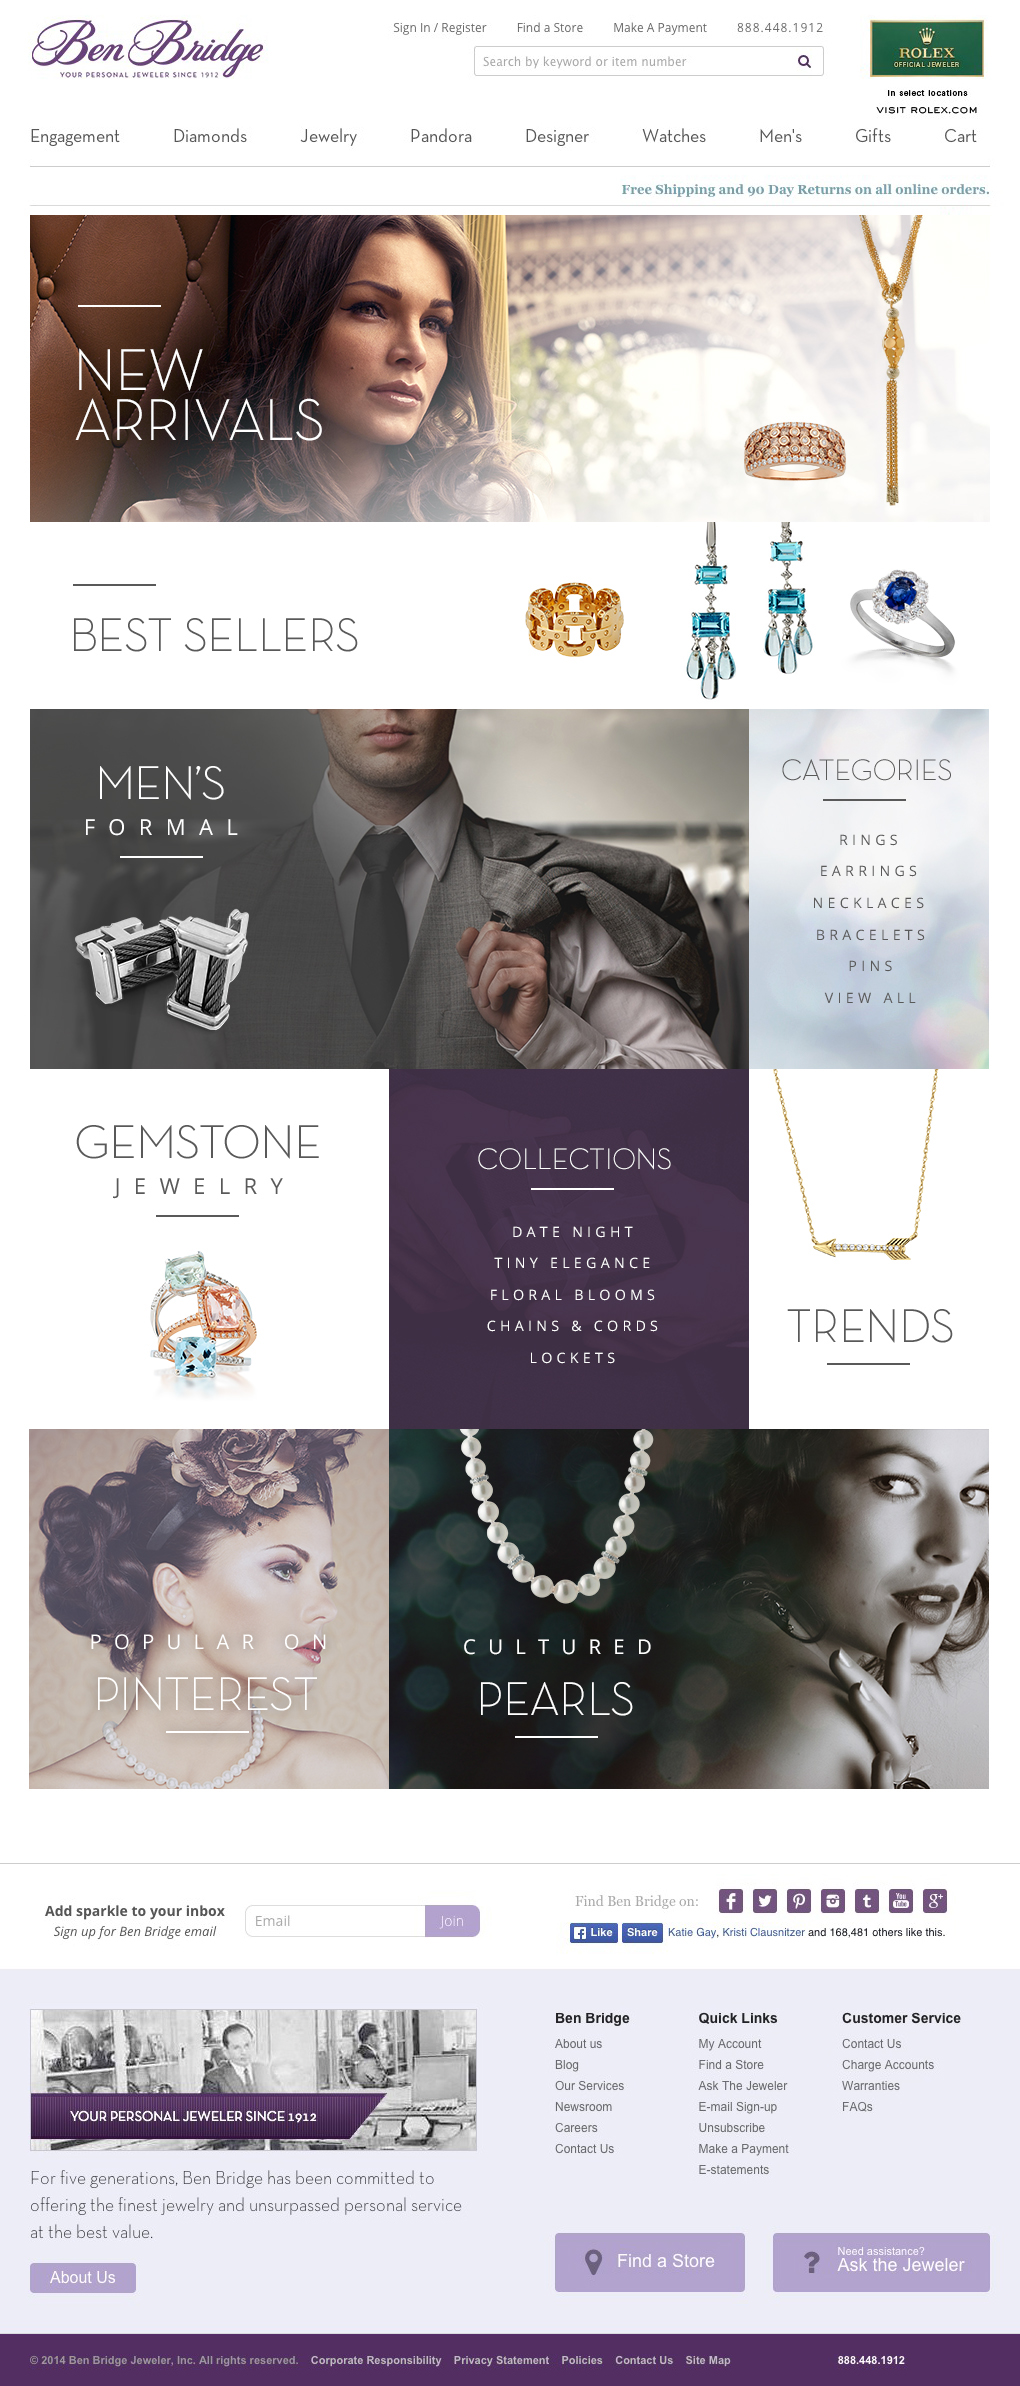 Adobe Portfolio Jeweler jewelery Website luxury modern high-end ux commerce diamonds